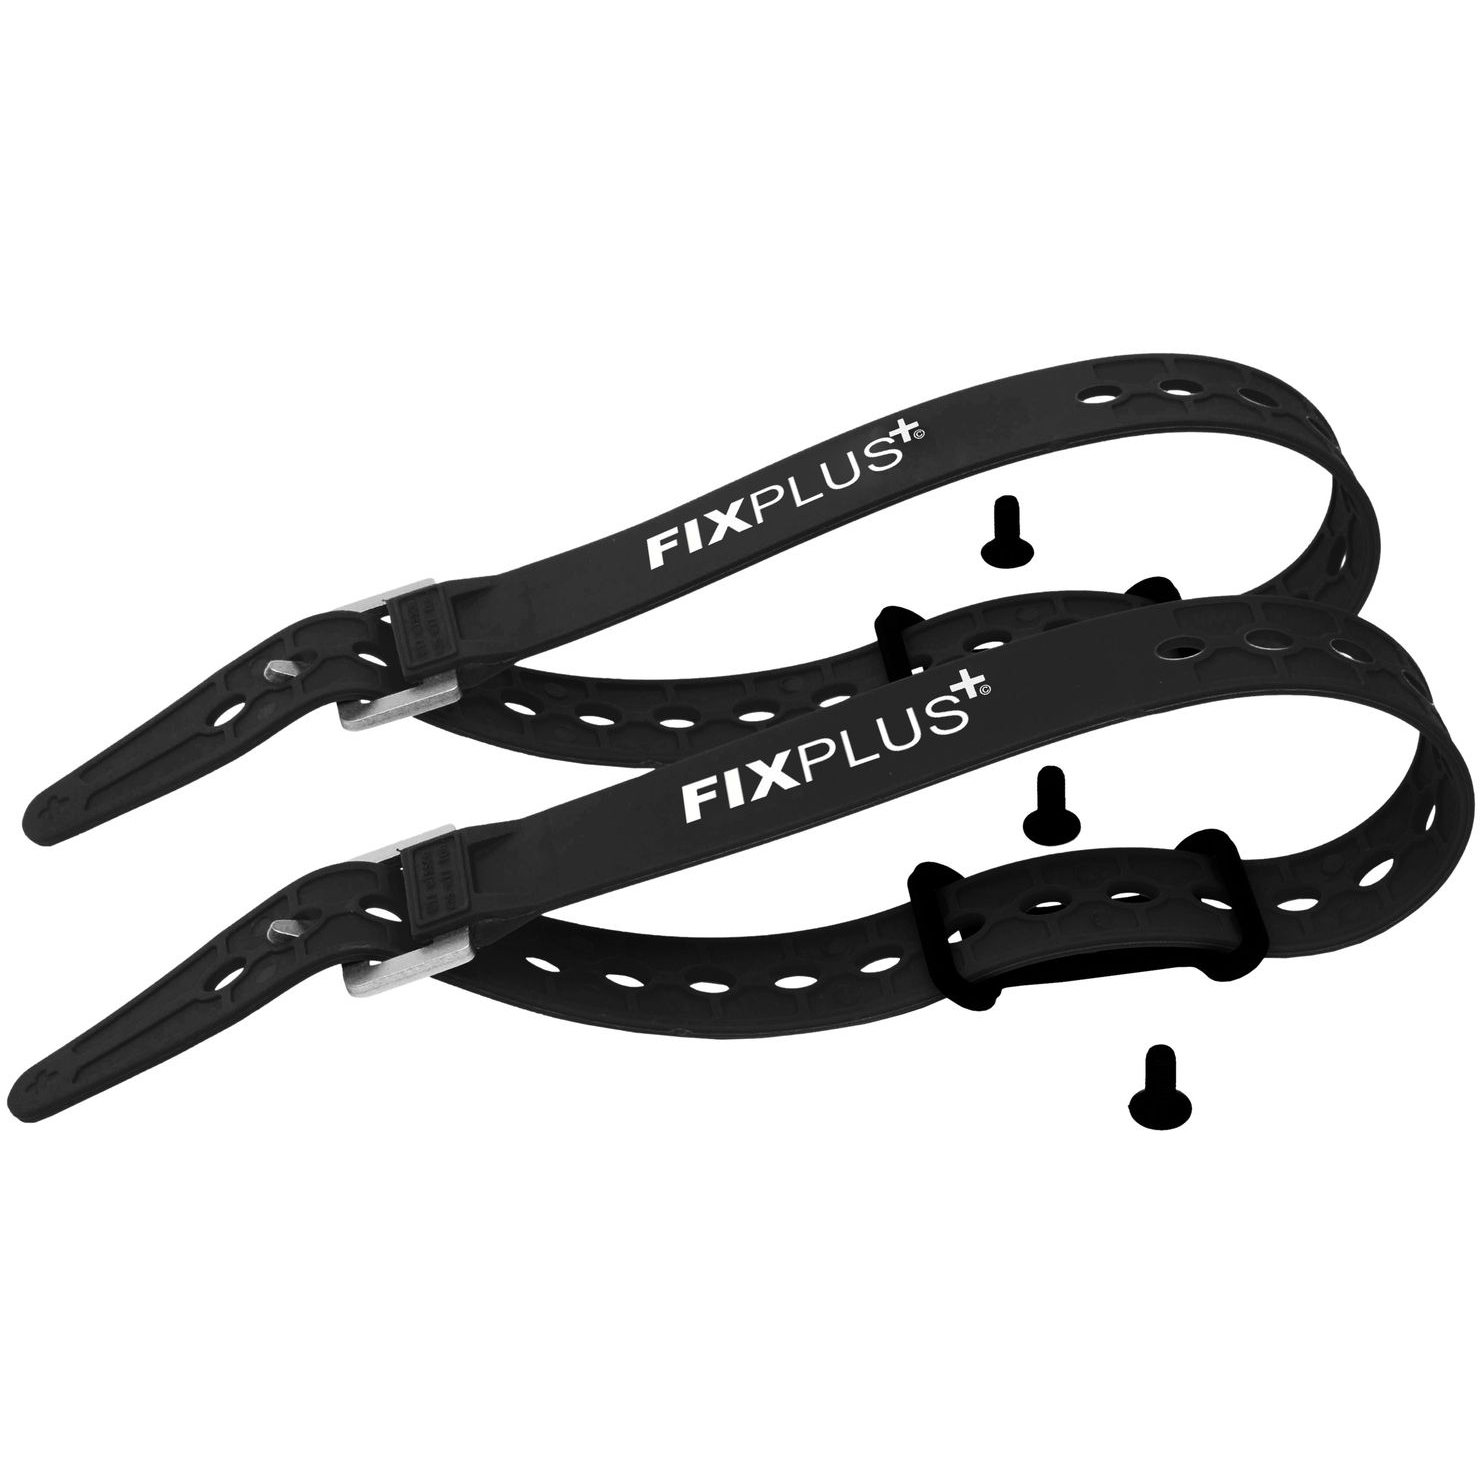 Productfoto van FixPlus Strap Anchor 2 pcs. incl. 2x Strap Black 46cm - black/black